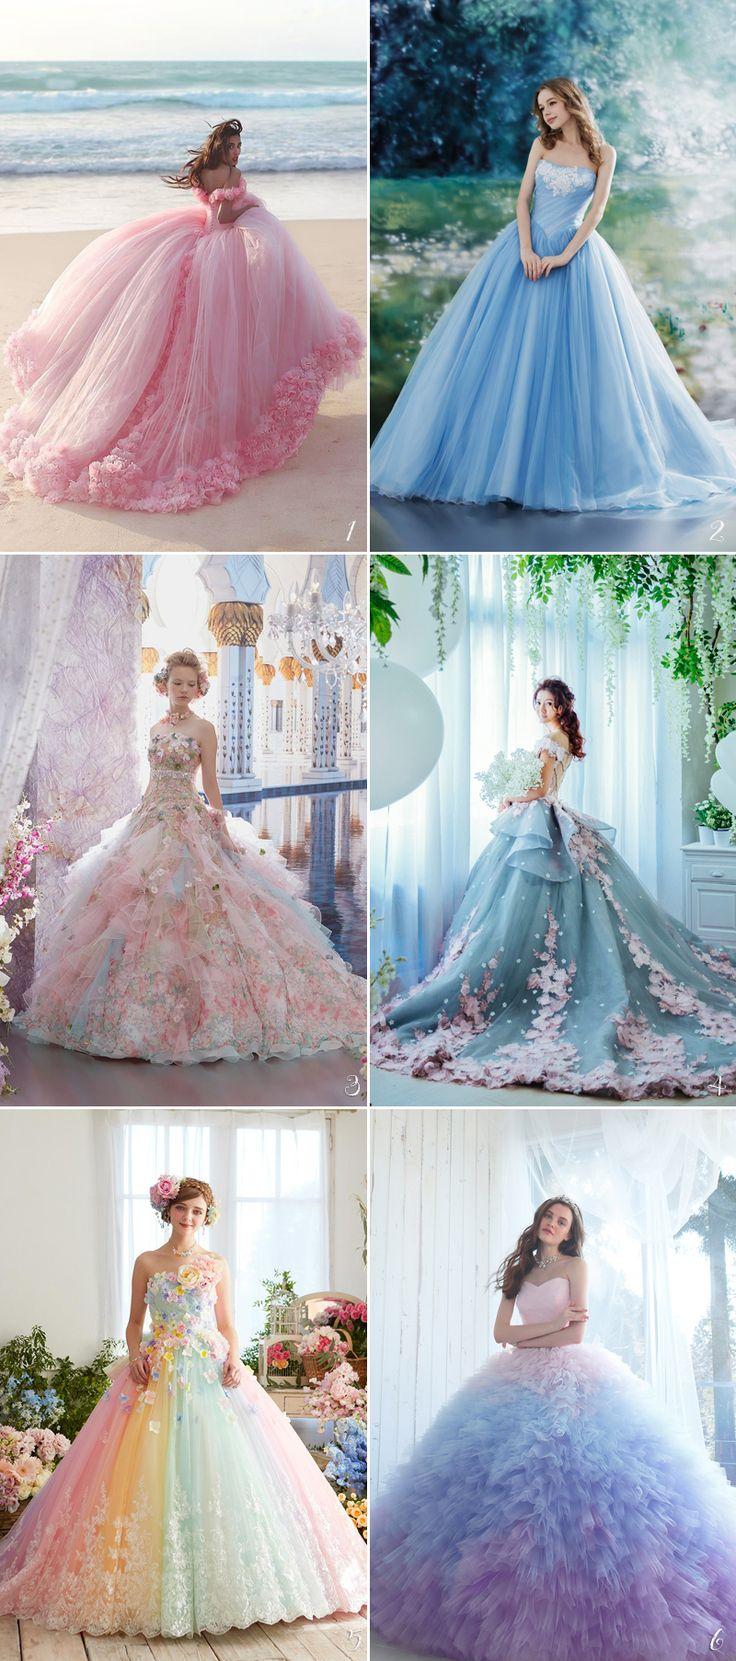 زفاف - 24 Princess-Worthy Bridal Ball Gowns You'll Love